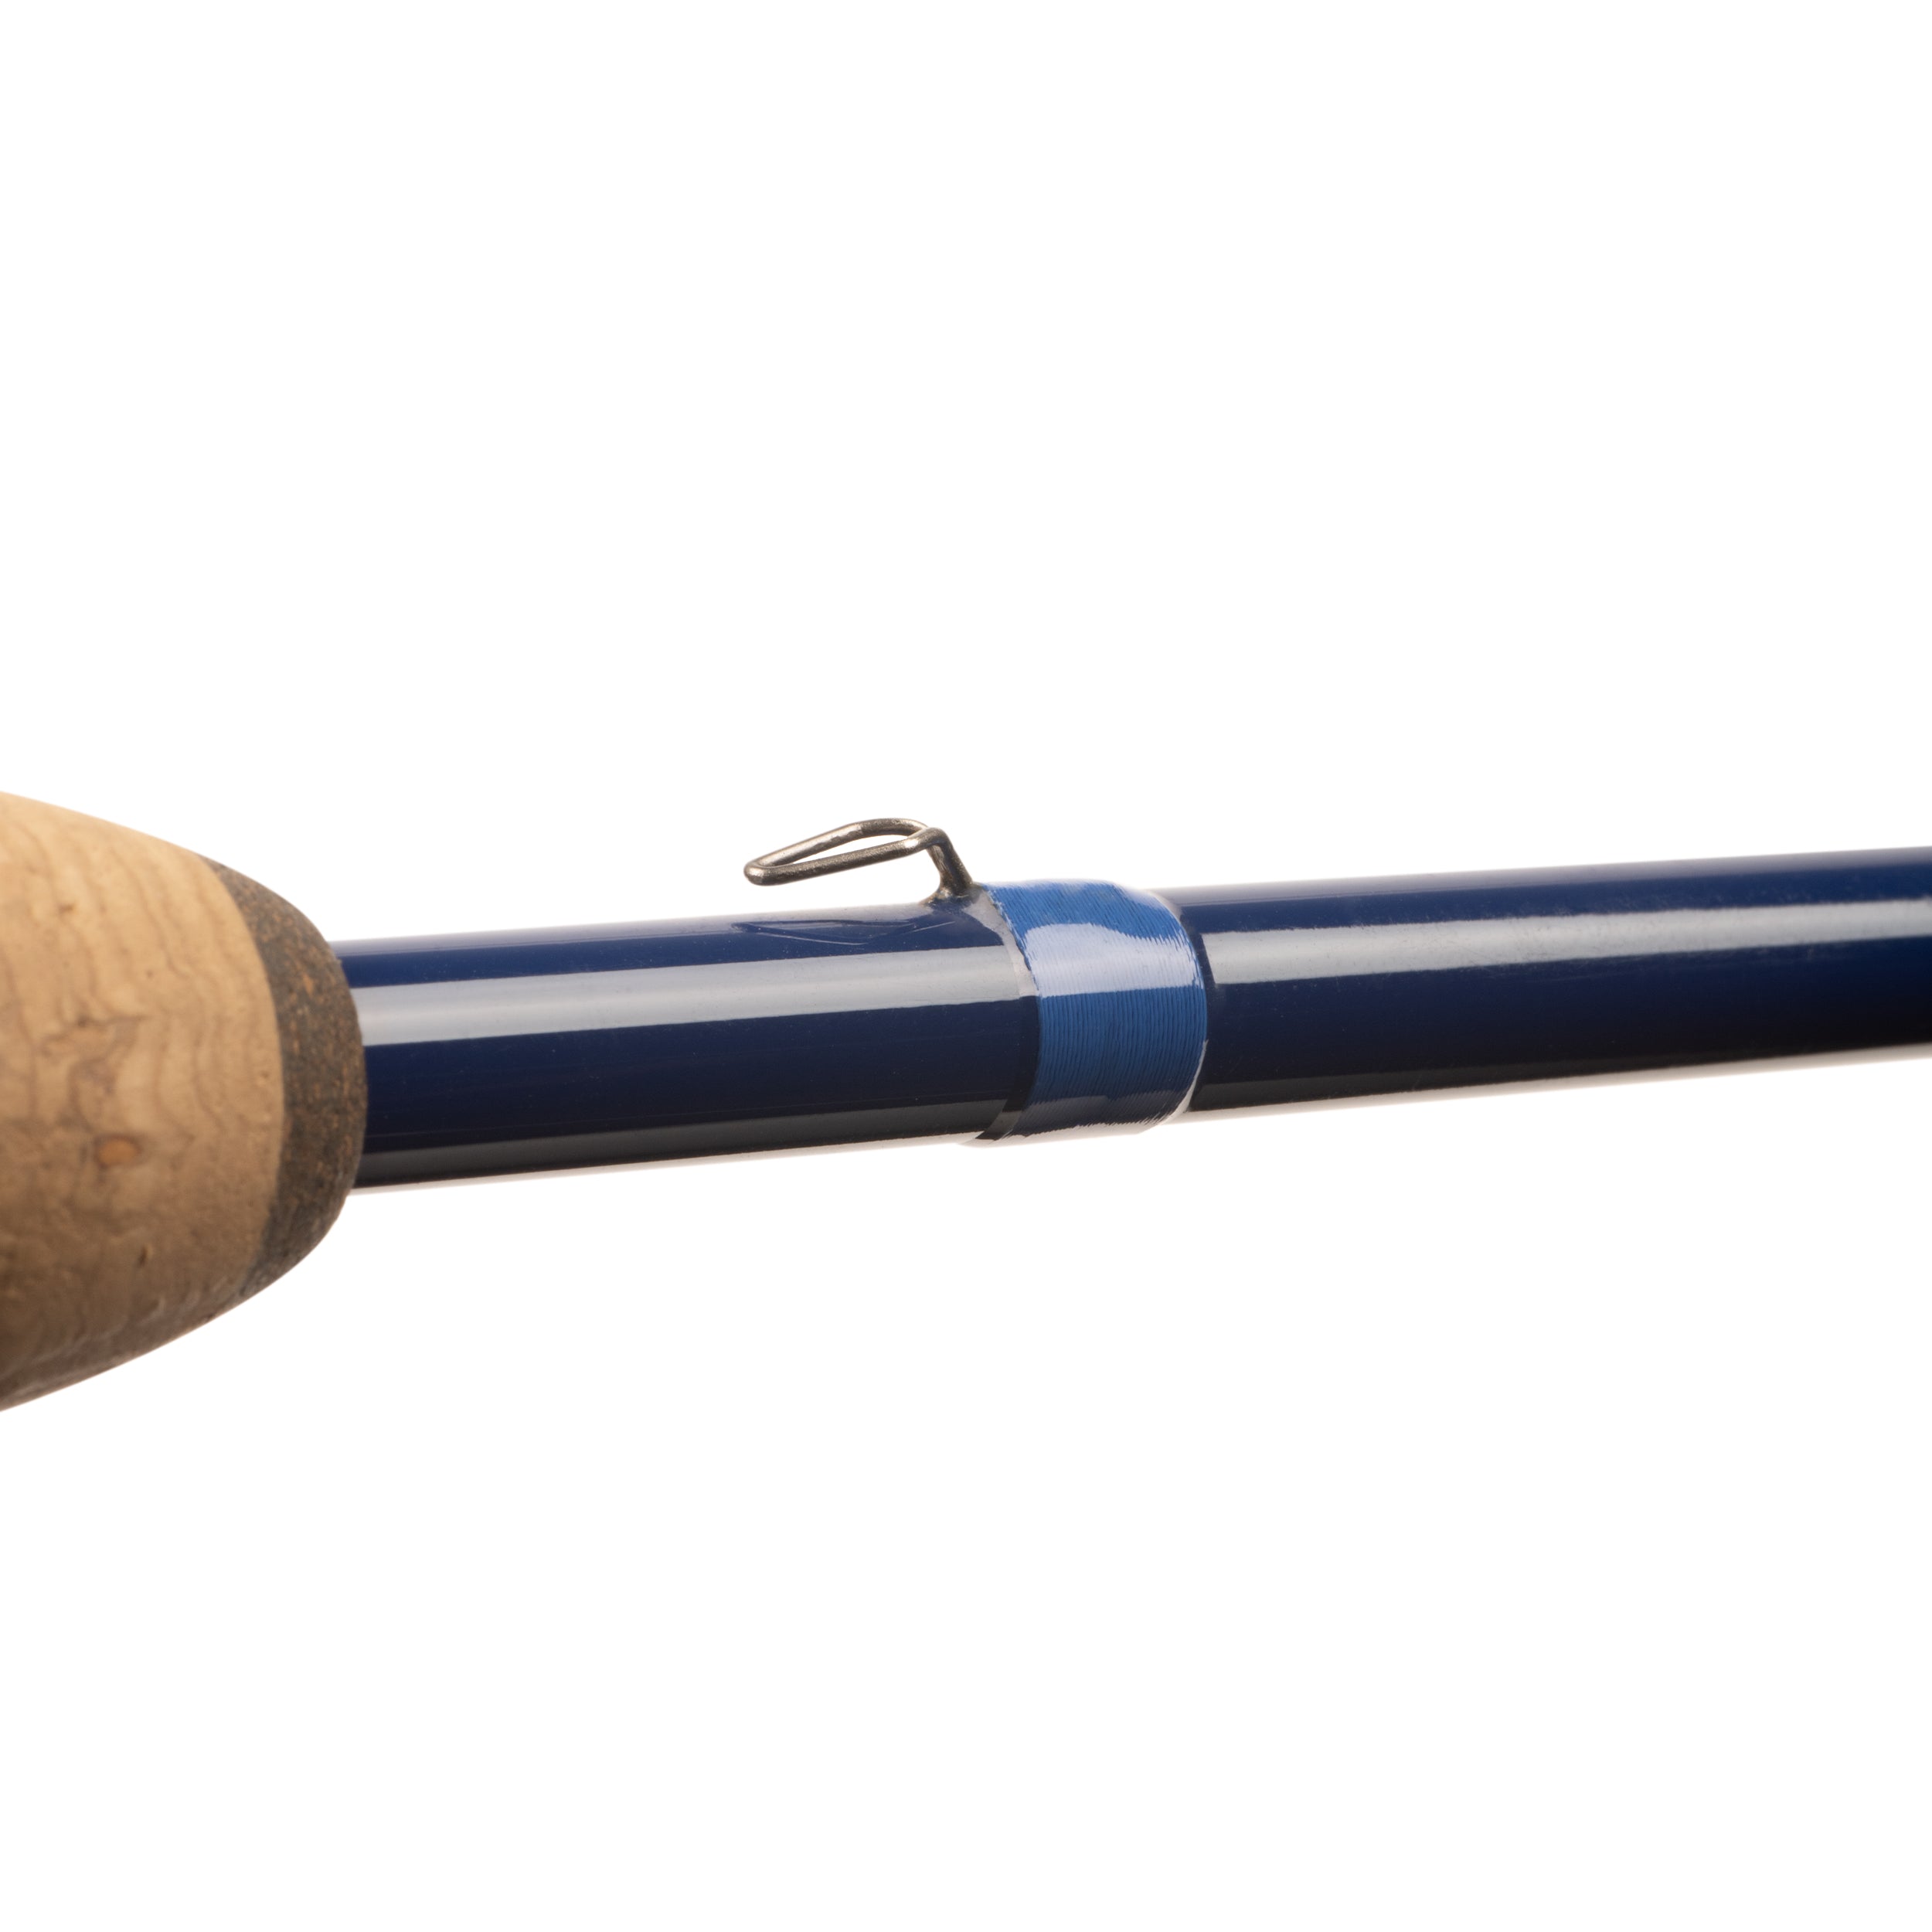 Chris Adams Versatile Inshore 7’ Light Spinning Rod Component Kit